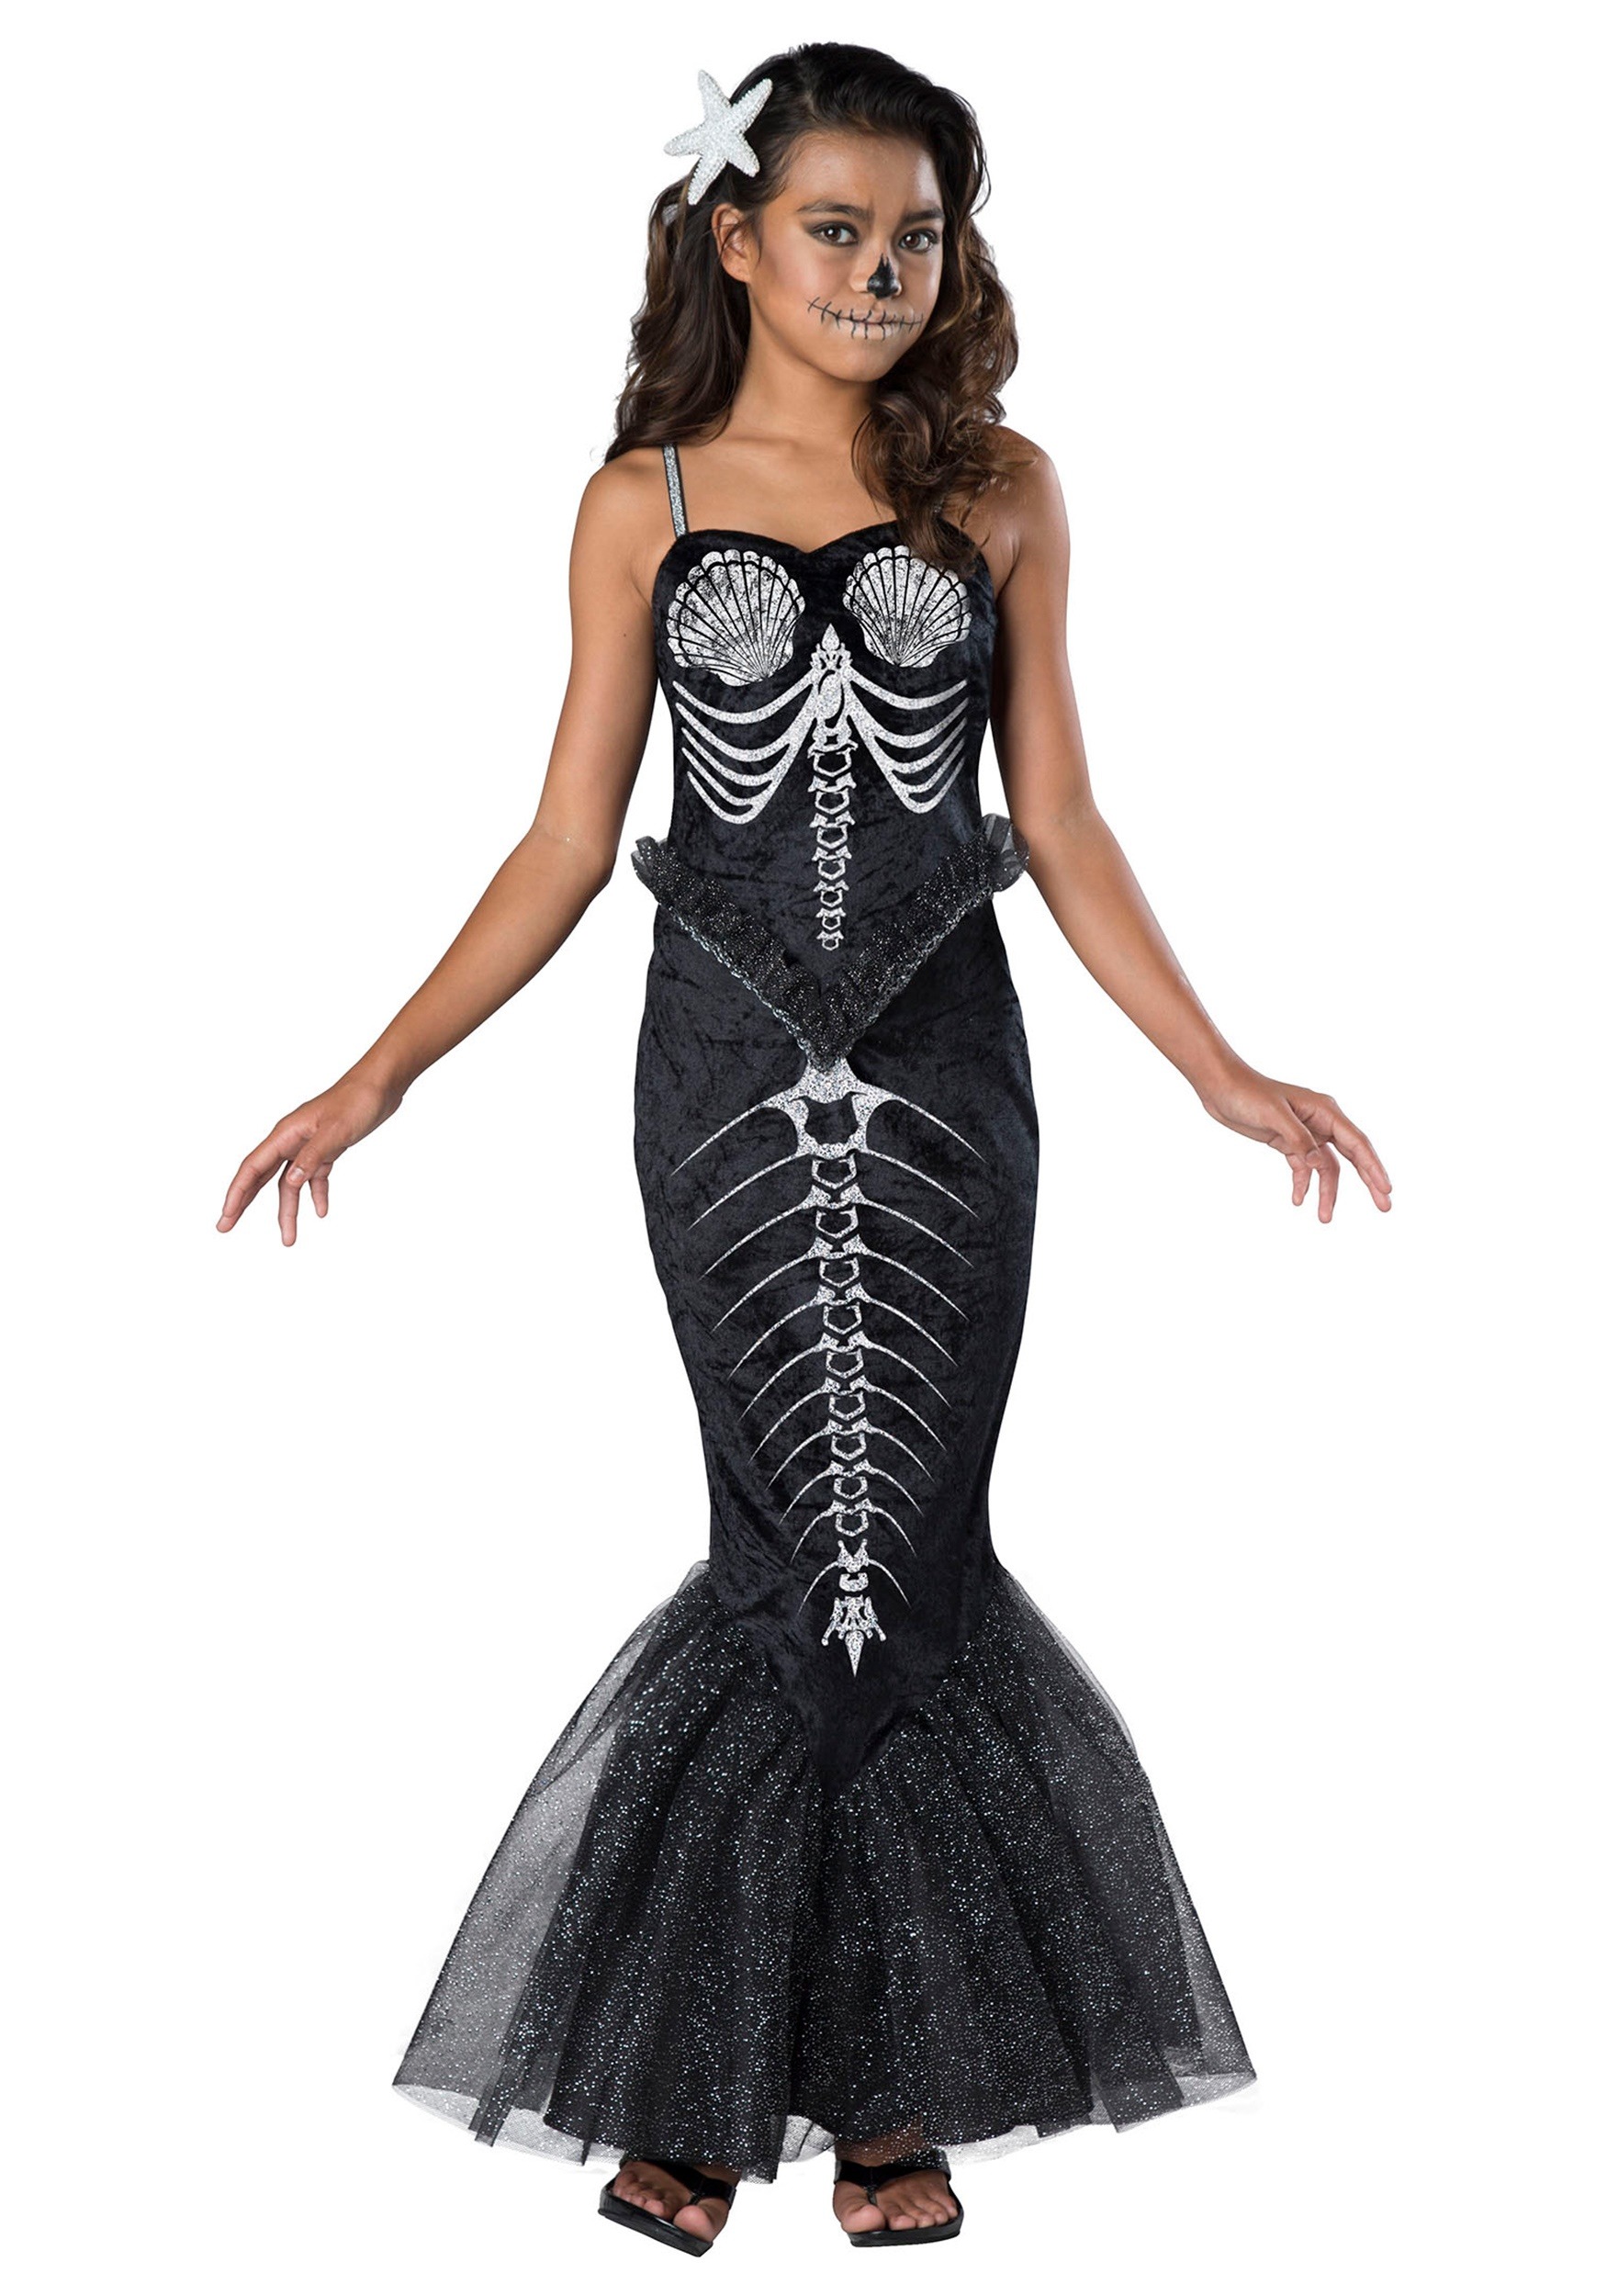 Skeleton Mermaid Kids Costume